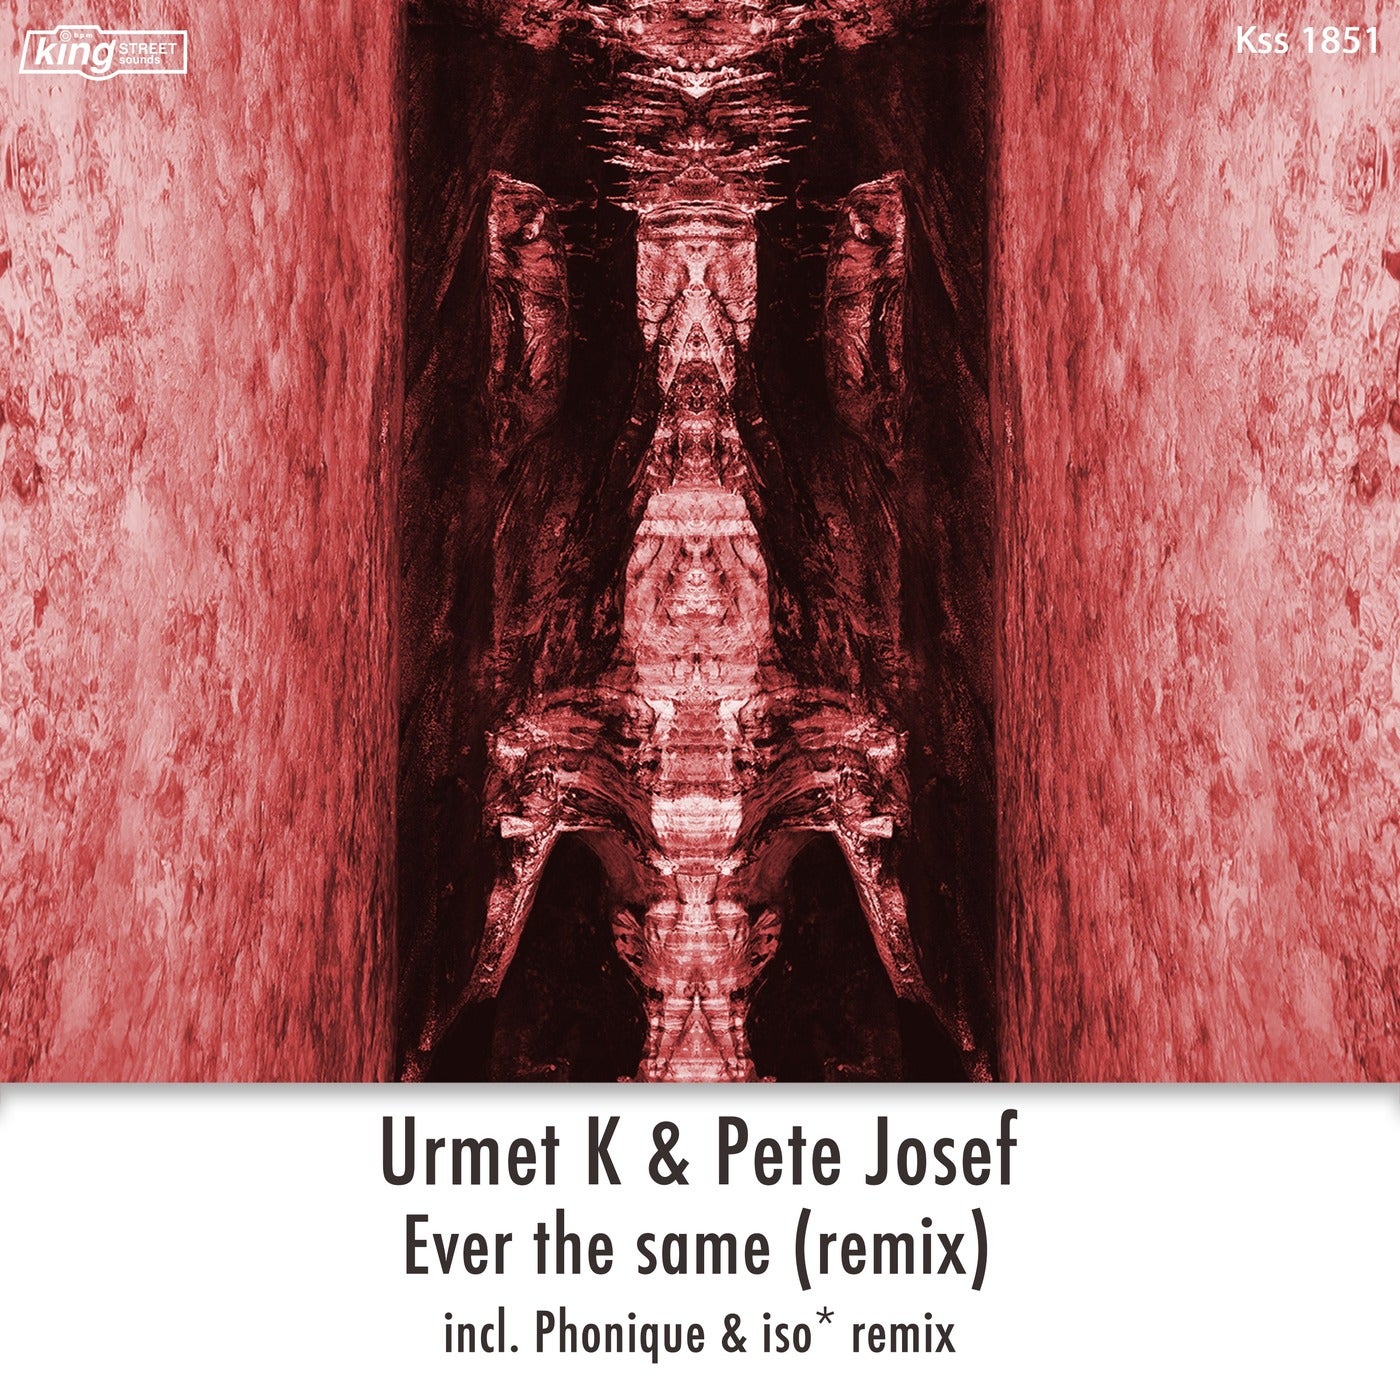 Urmet K, Pete Josef – Ever The Same (Remix) [KSS1851]